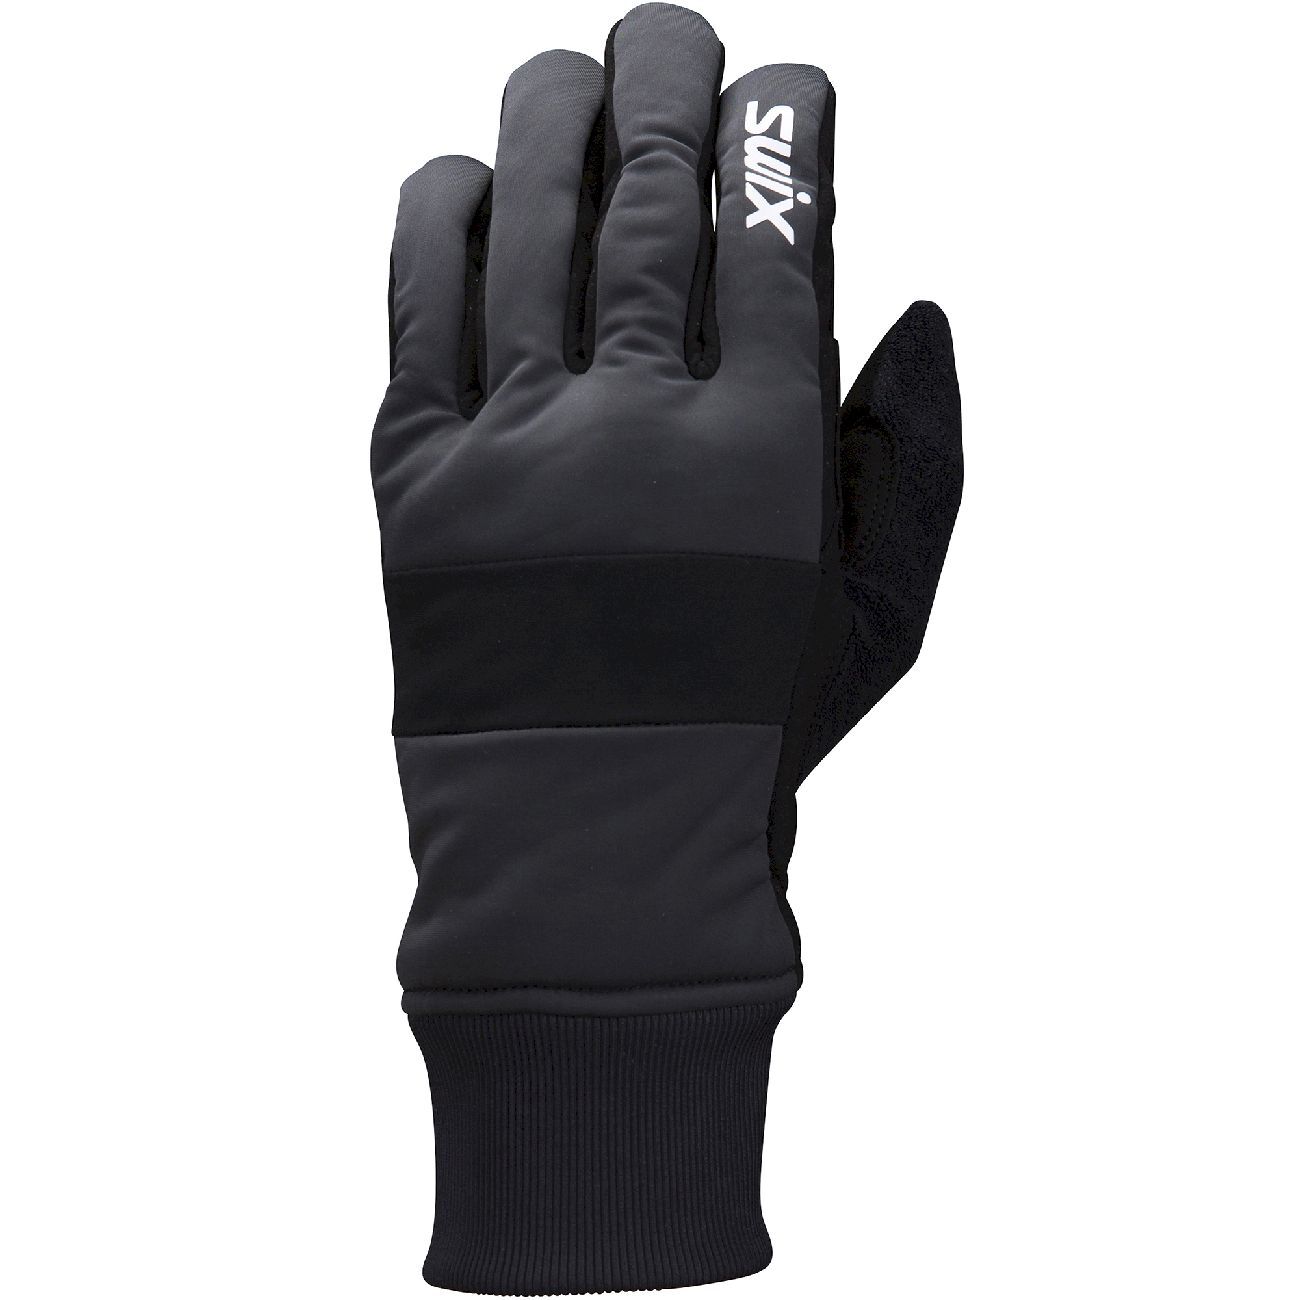 Swix Cross Glove - Cross-country ski gloves